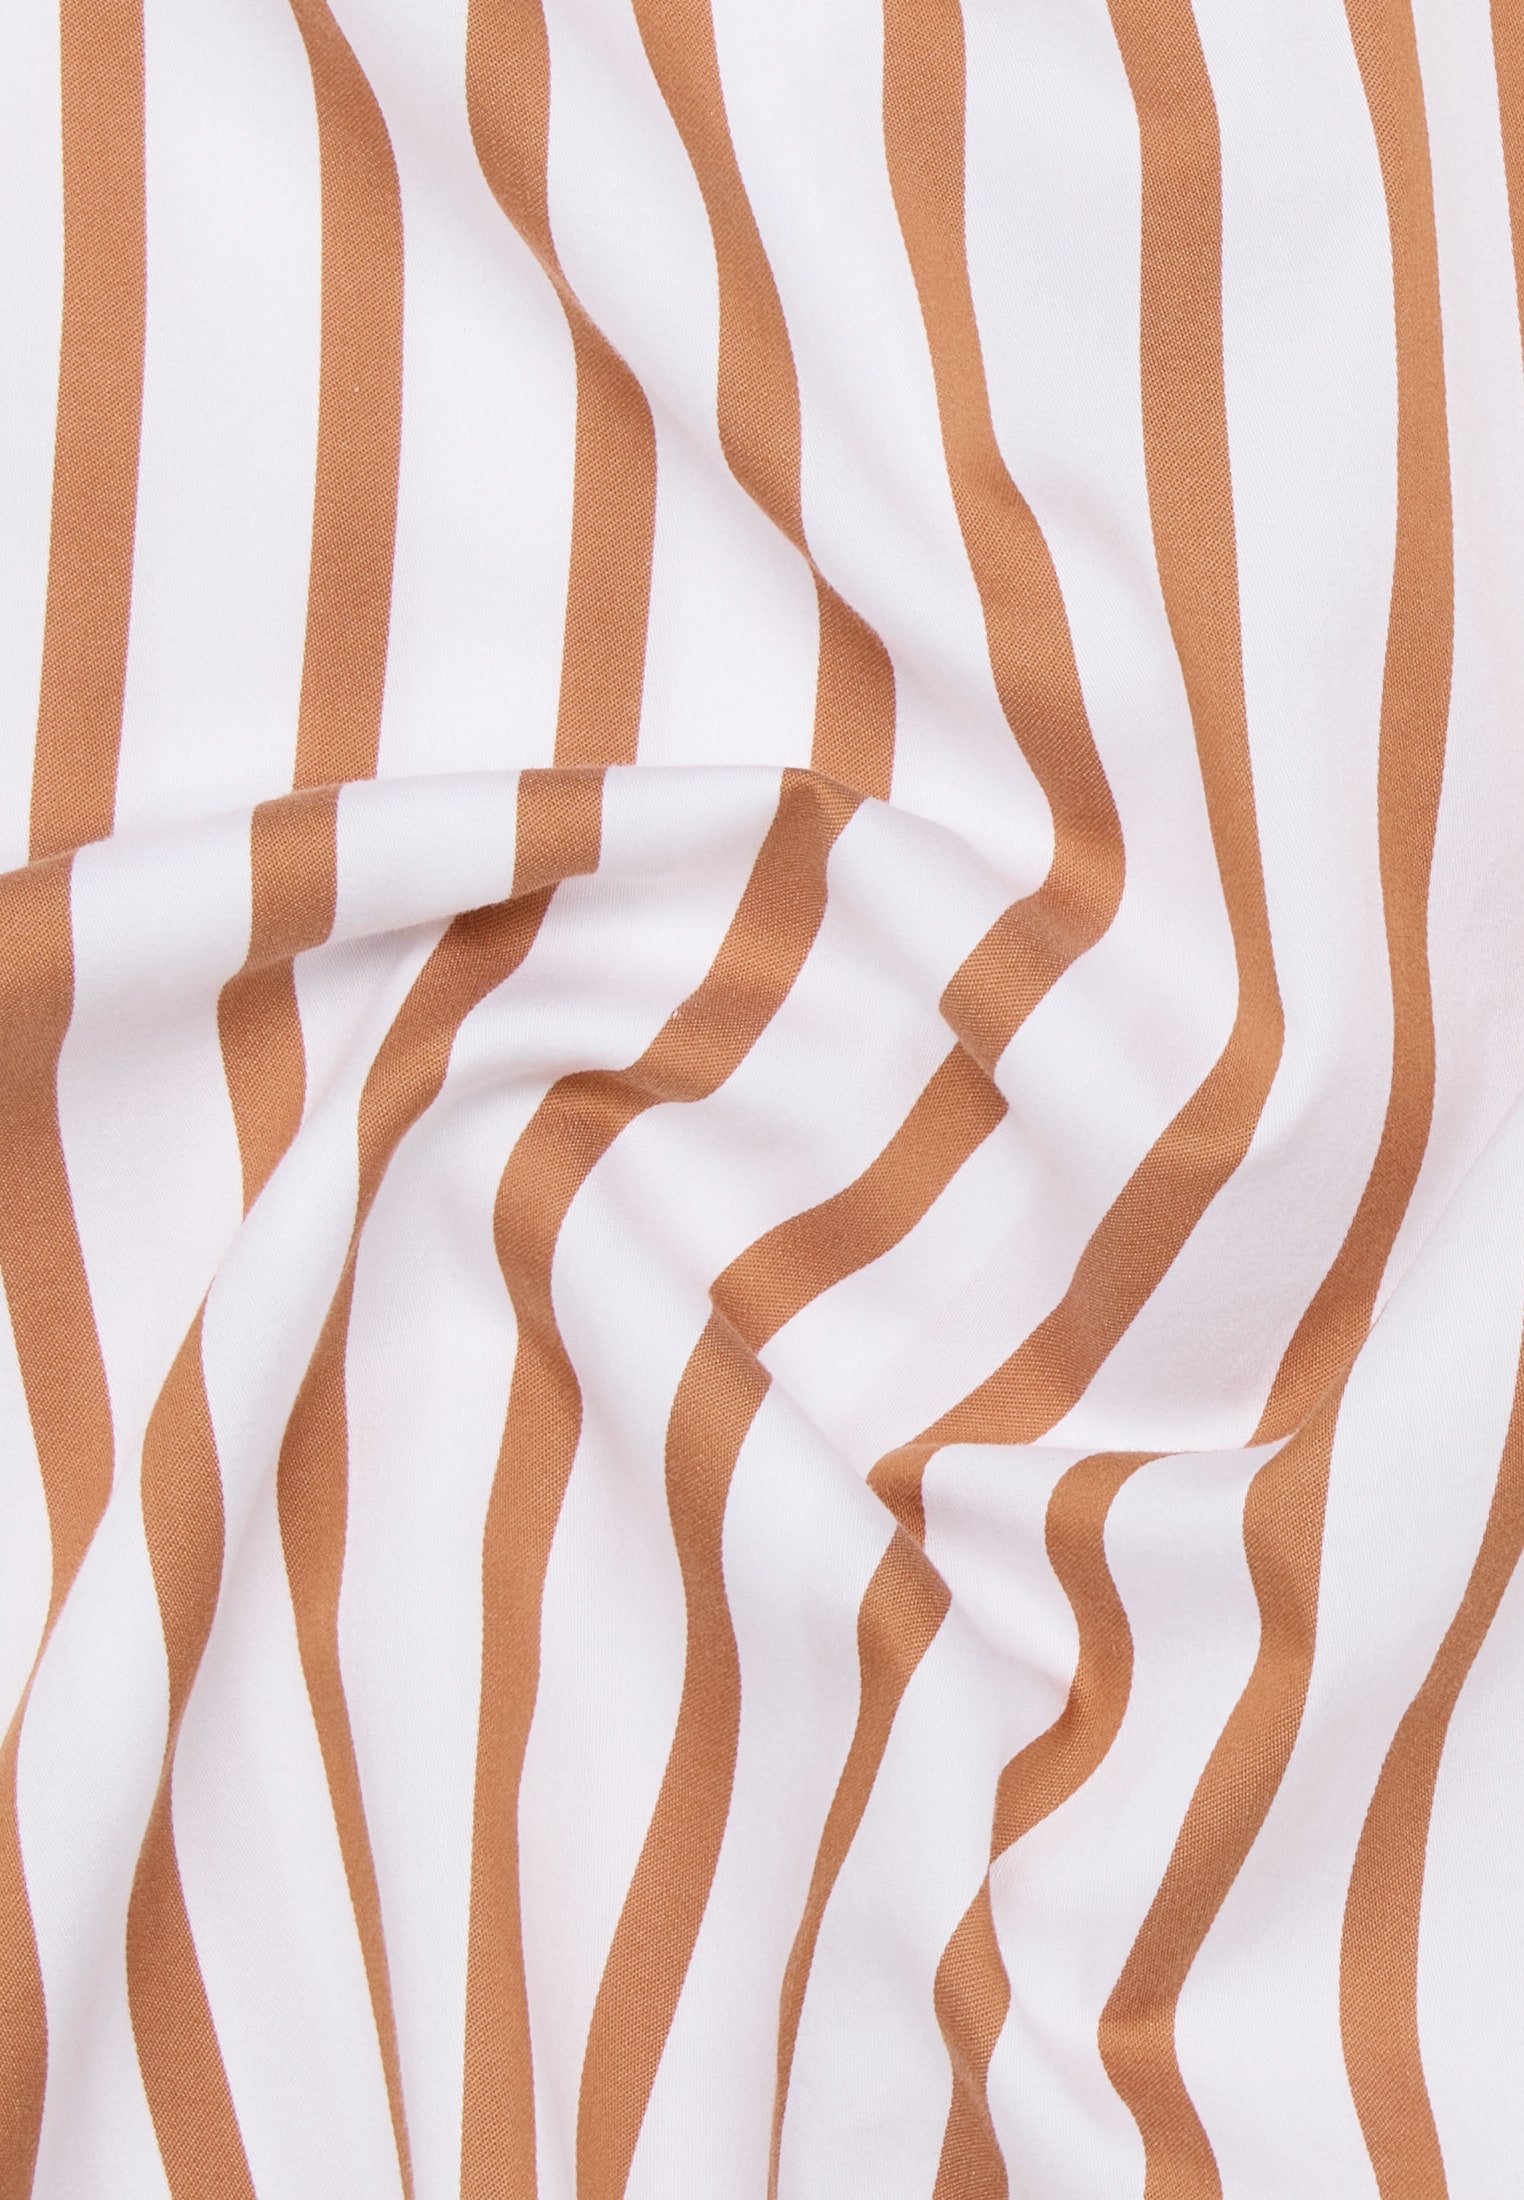 shirt-blouse in caramel striped